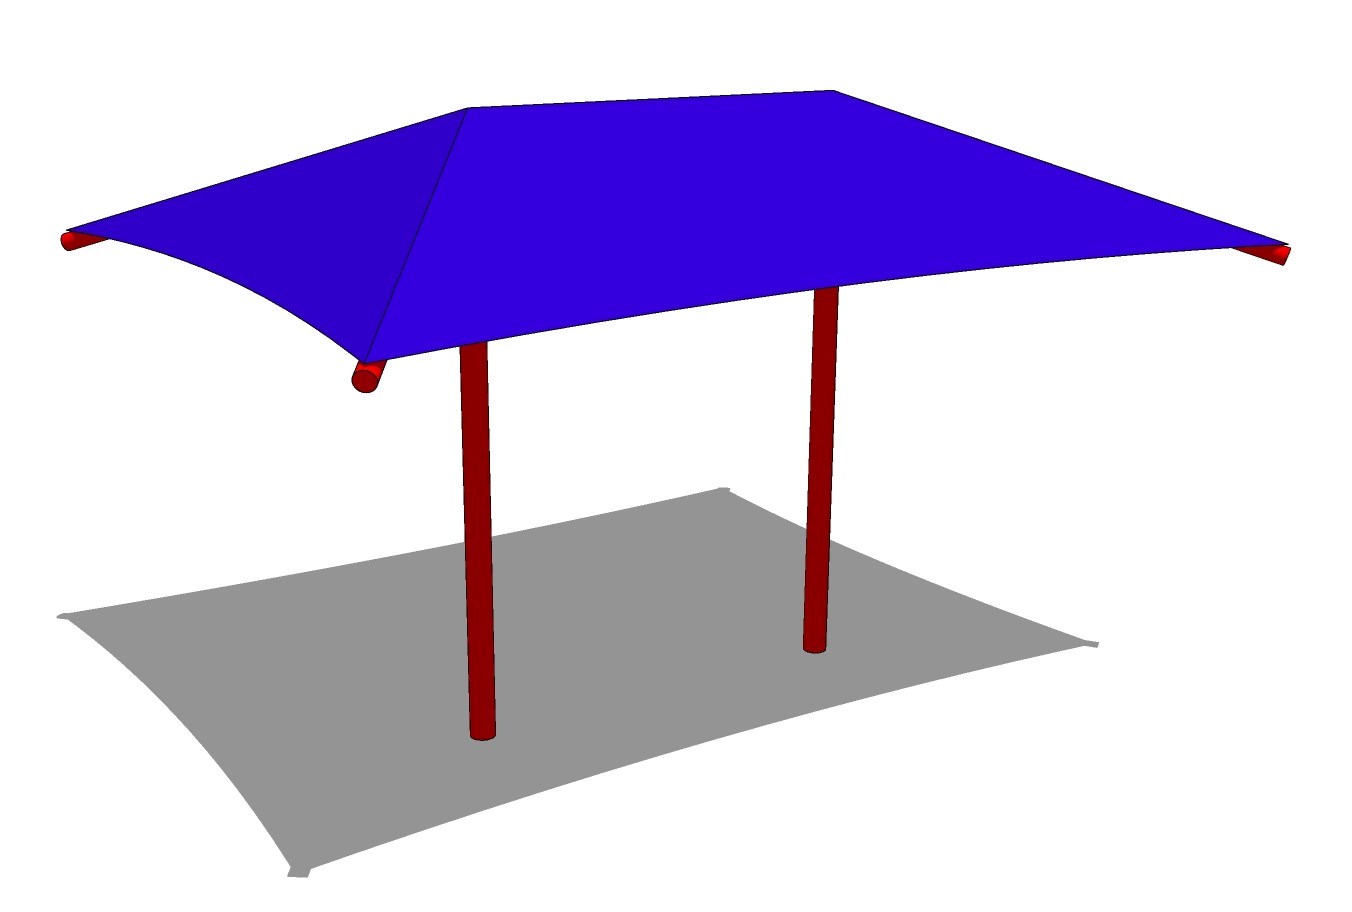 Fabric Structure: Double Tree Umbrella